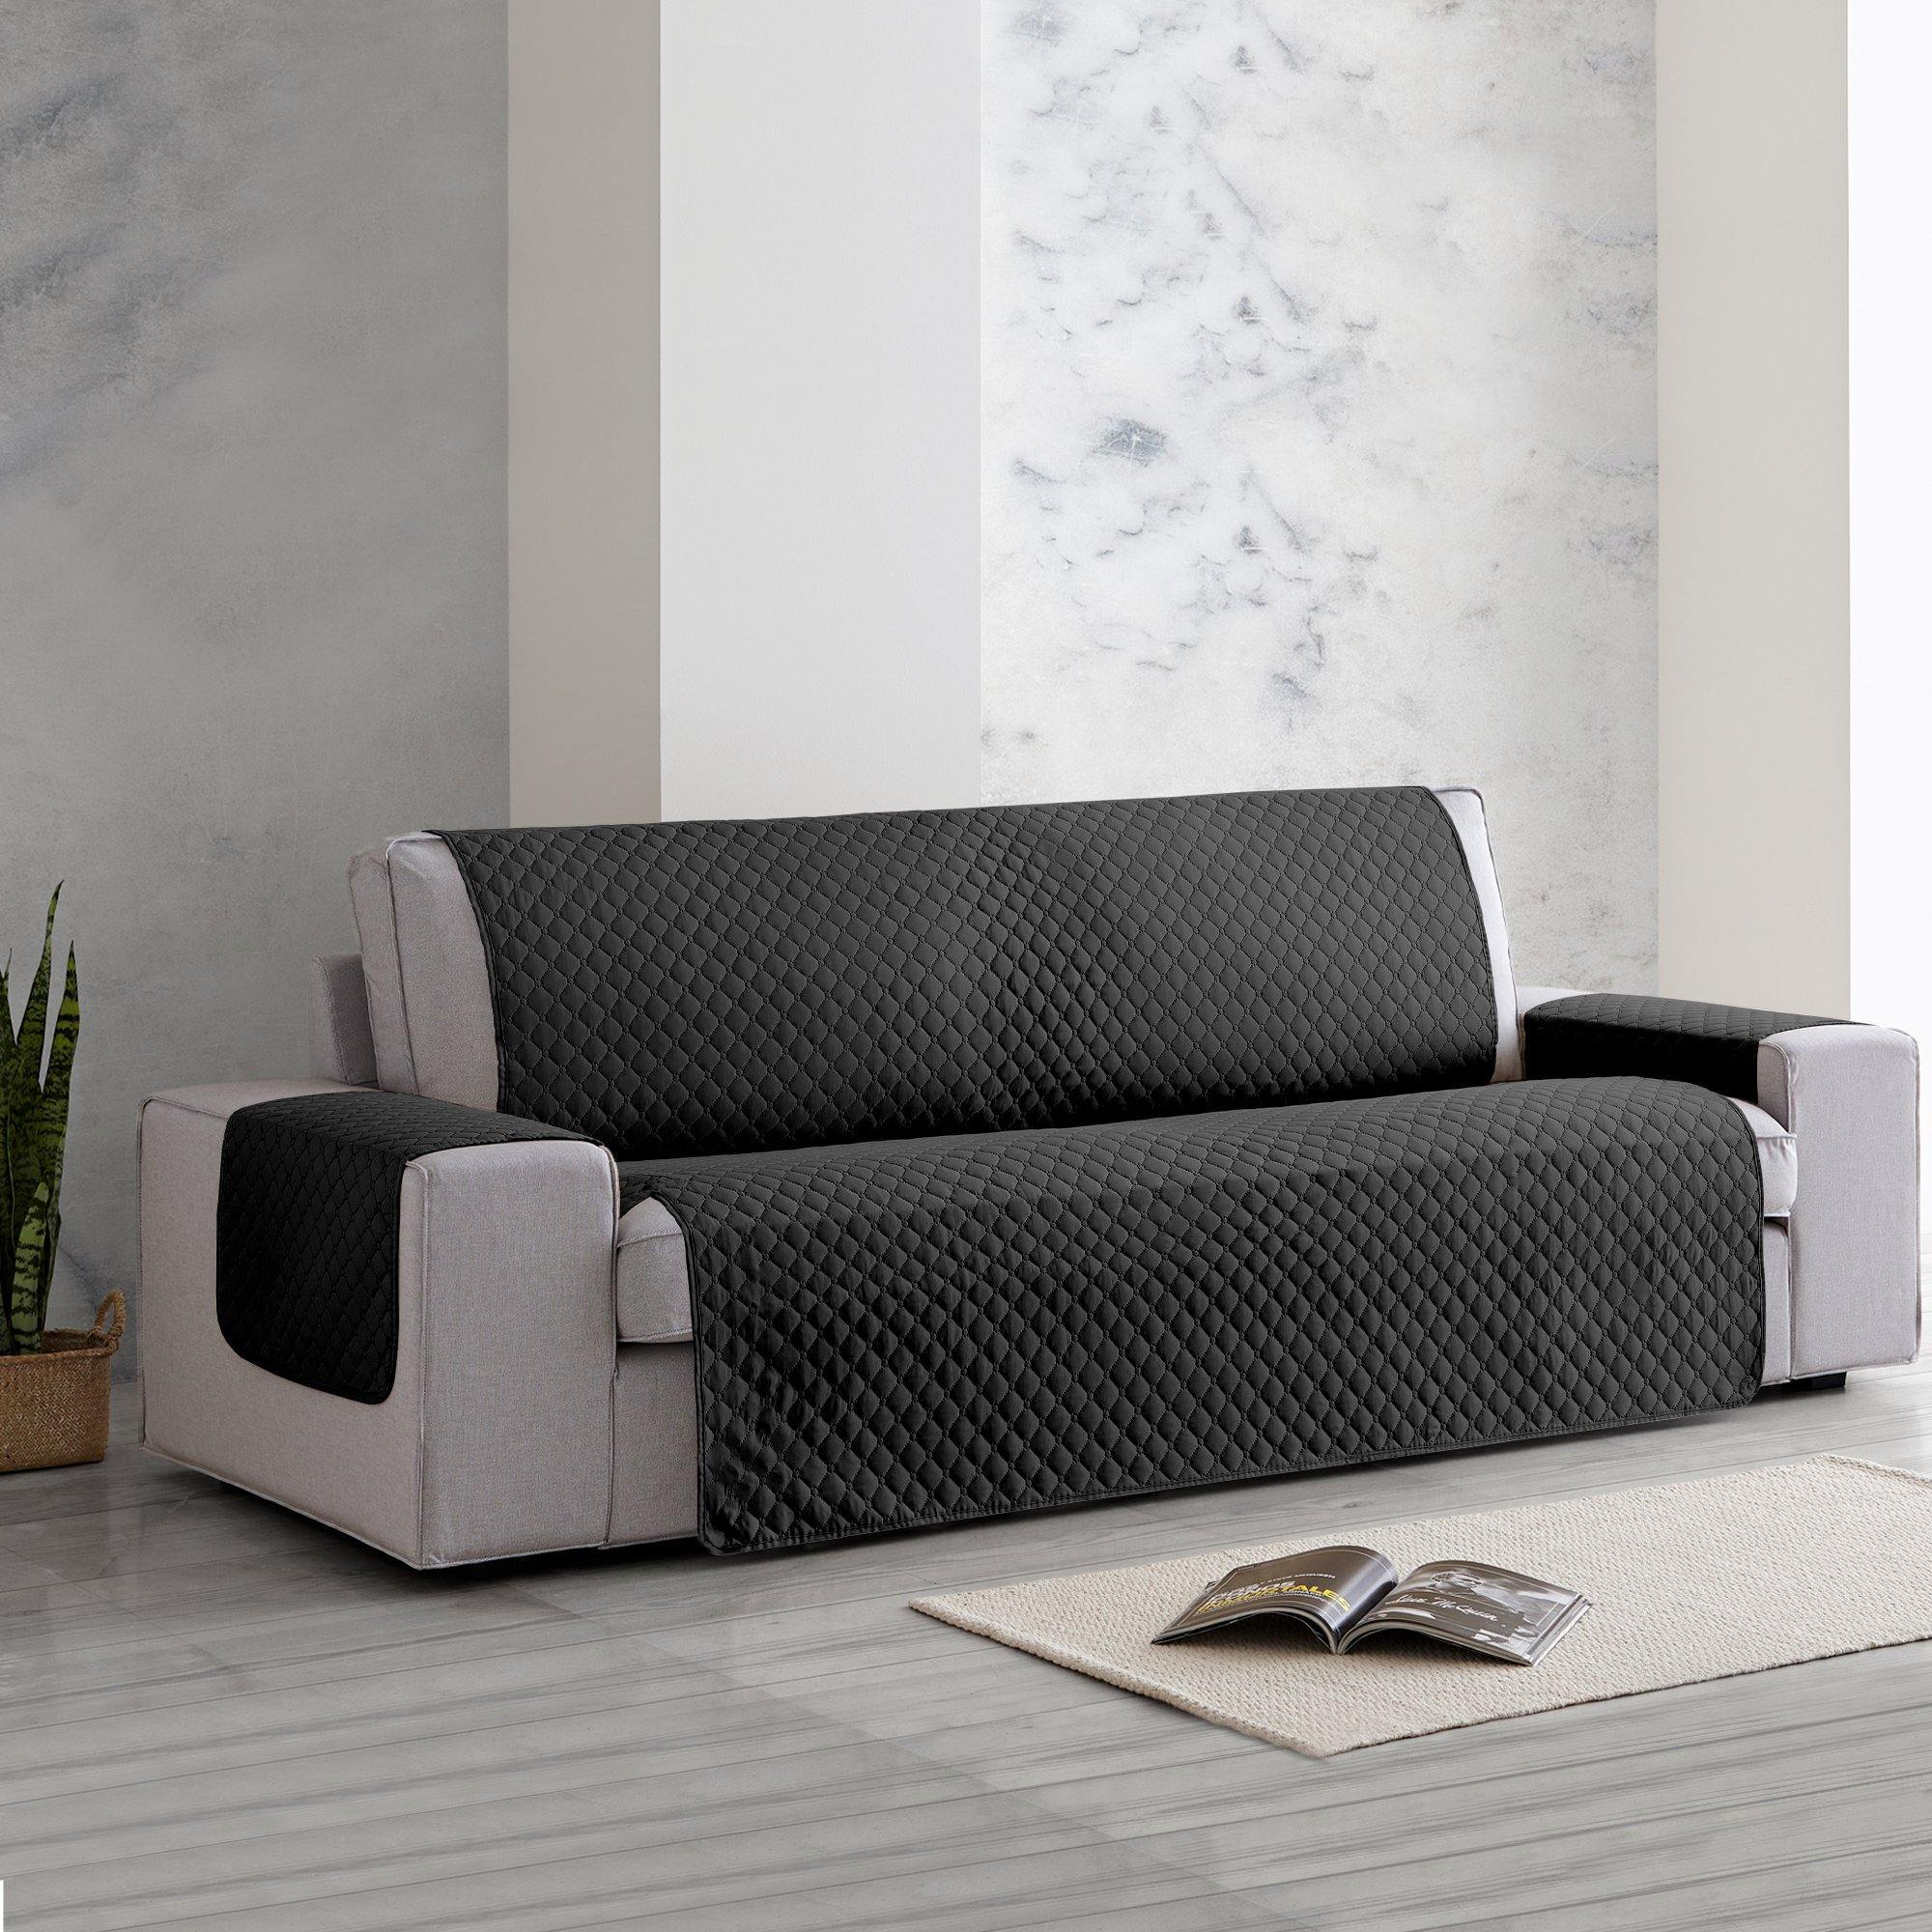 Nuevo Sofa 1 Plaza Relax | Compra Online a Precios Super Baratos